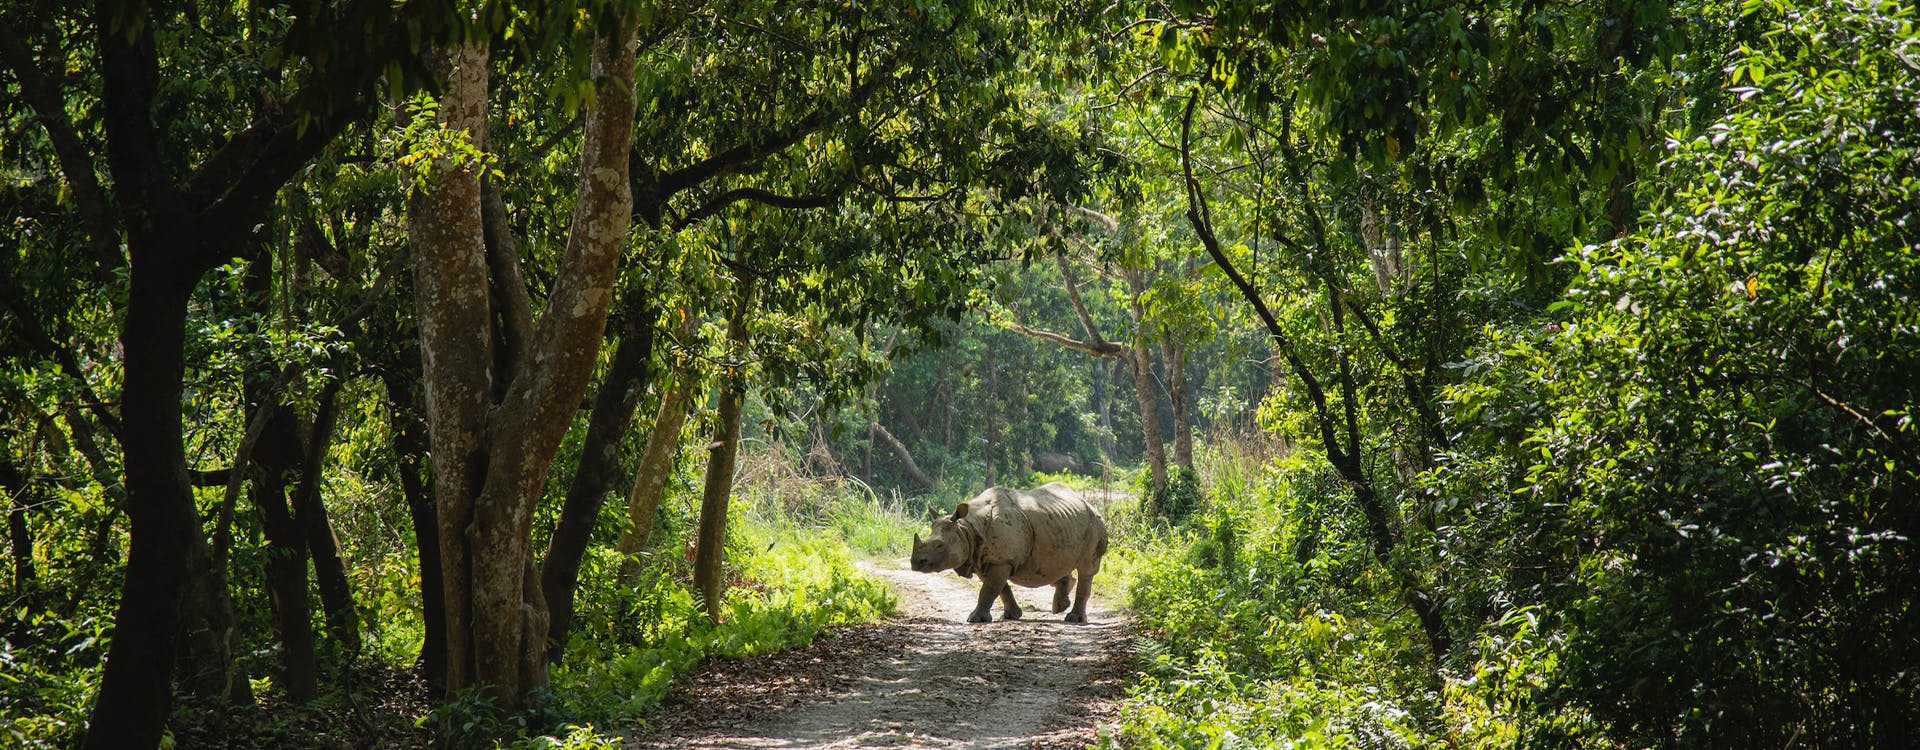 rhino spotted during safari tour